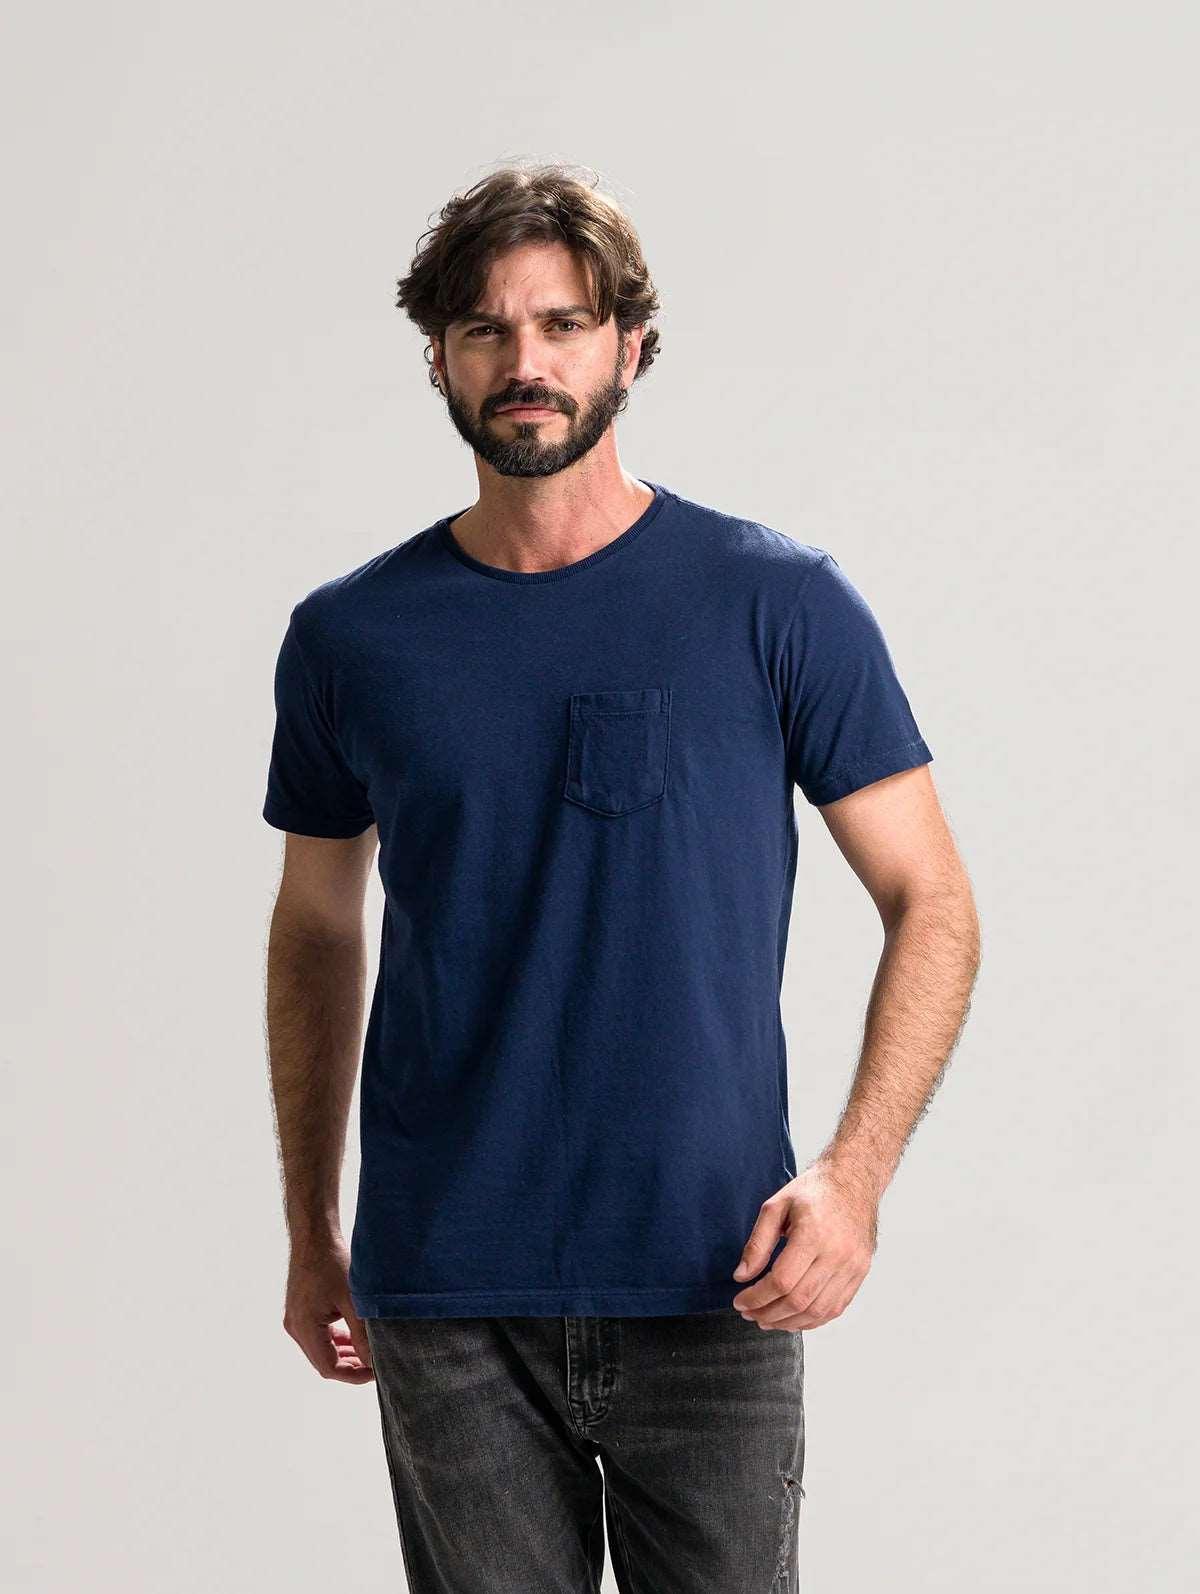 Camiseta Básica Azul Marinho com Bolso Kessler - Kessler